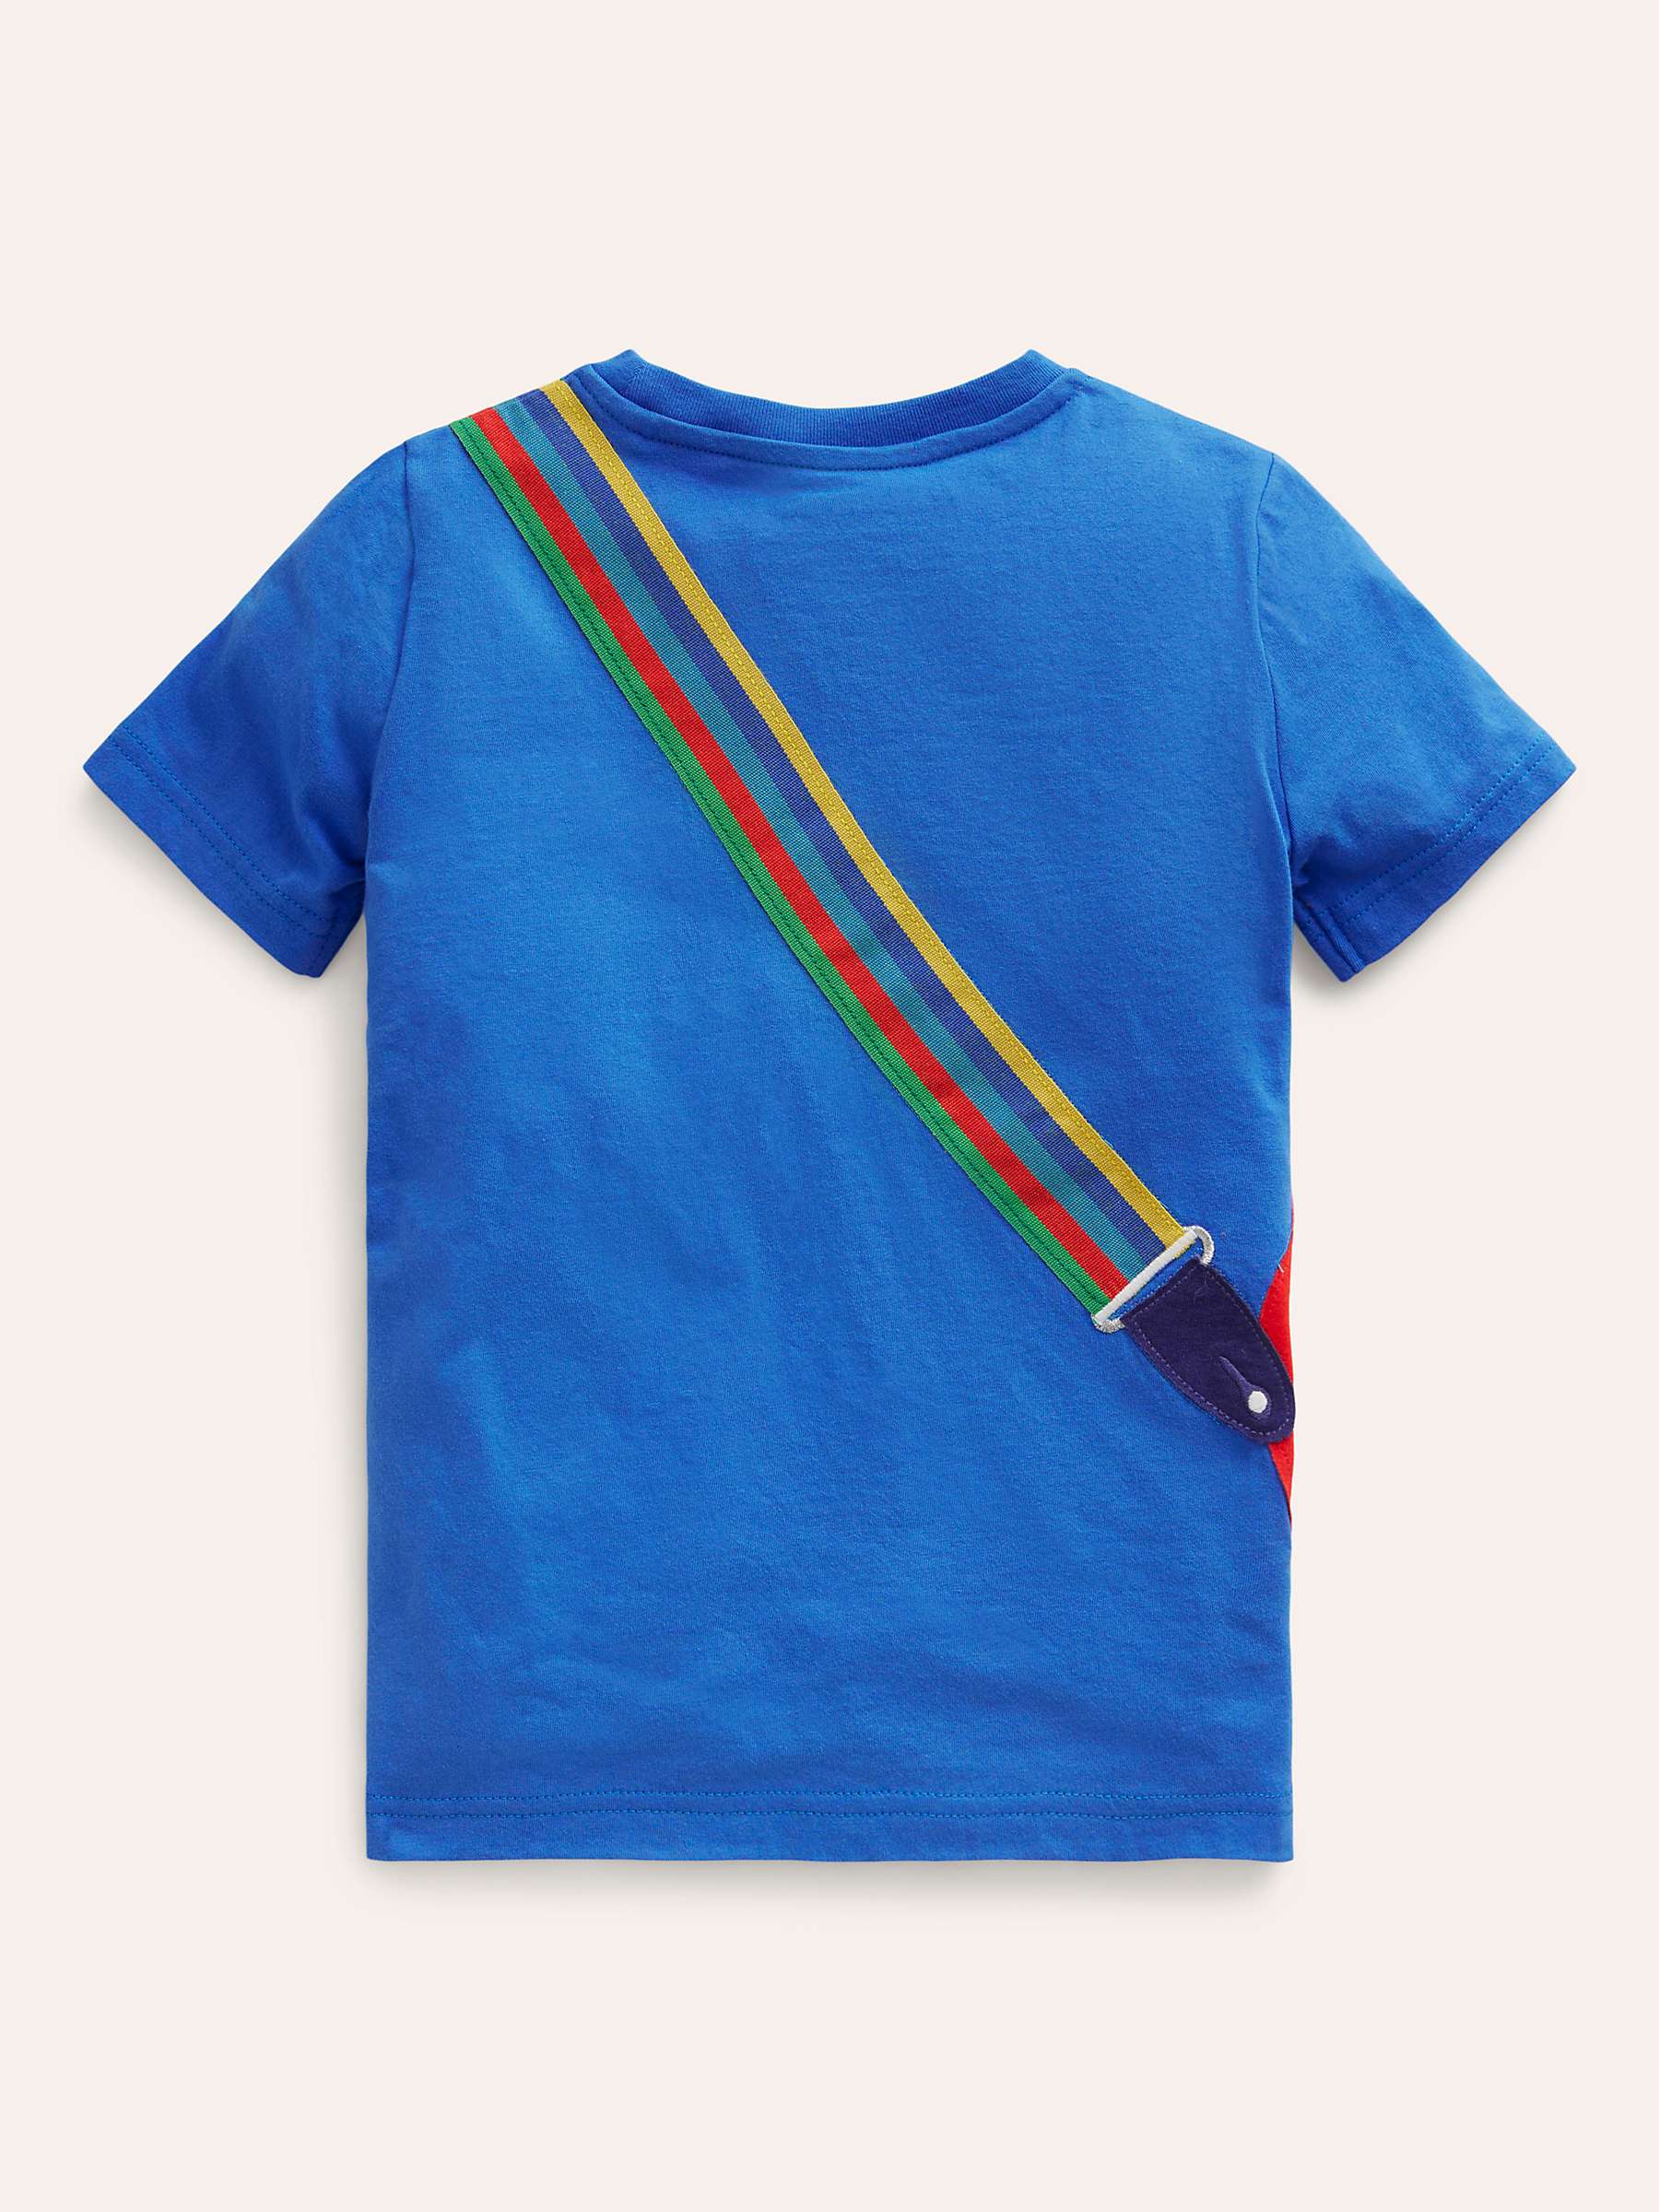 Buy Mini Boden Kids' Guitar Applique T-Shirt, Duck Egg Blue Online at johnlewis.com